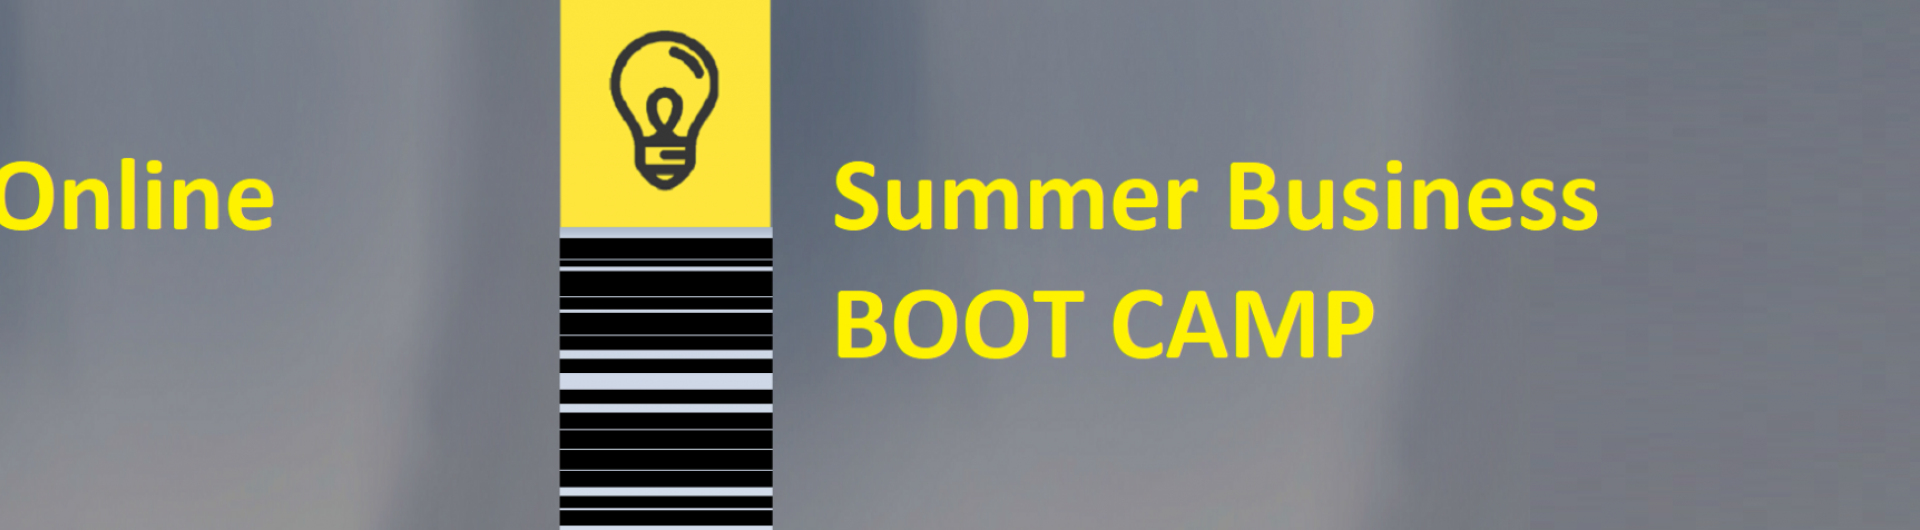 Summer Business Boot Camp